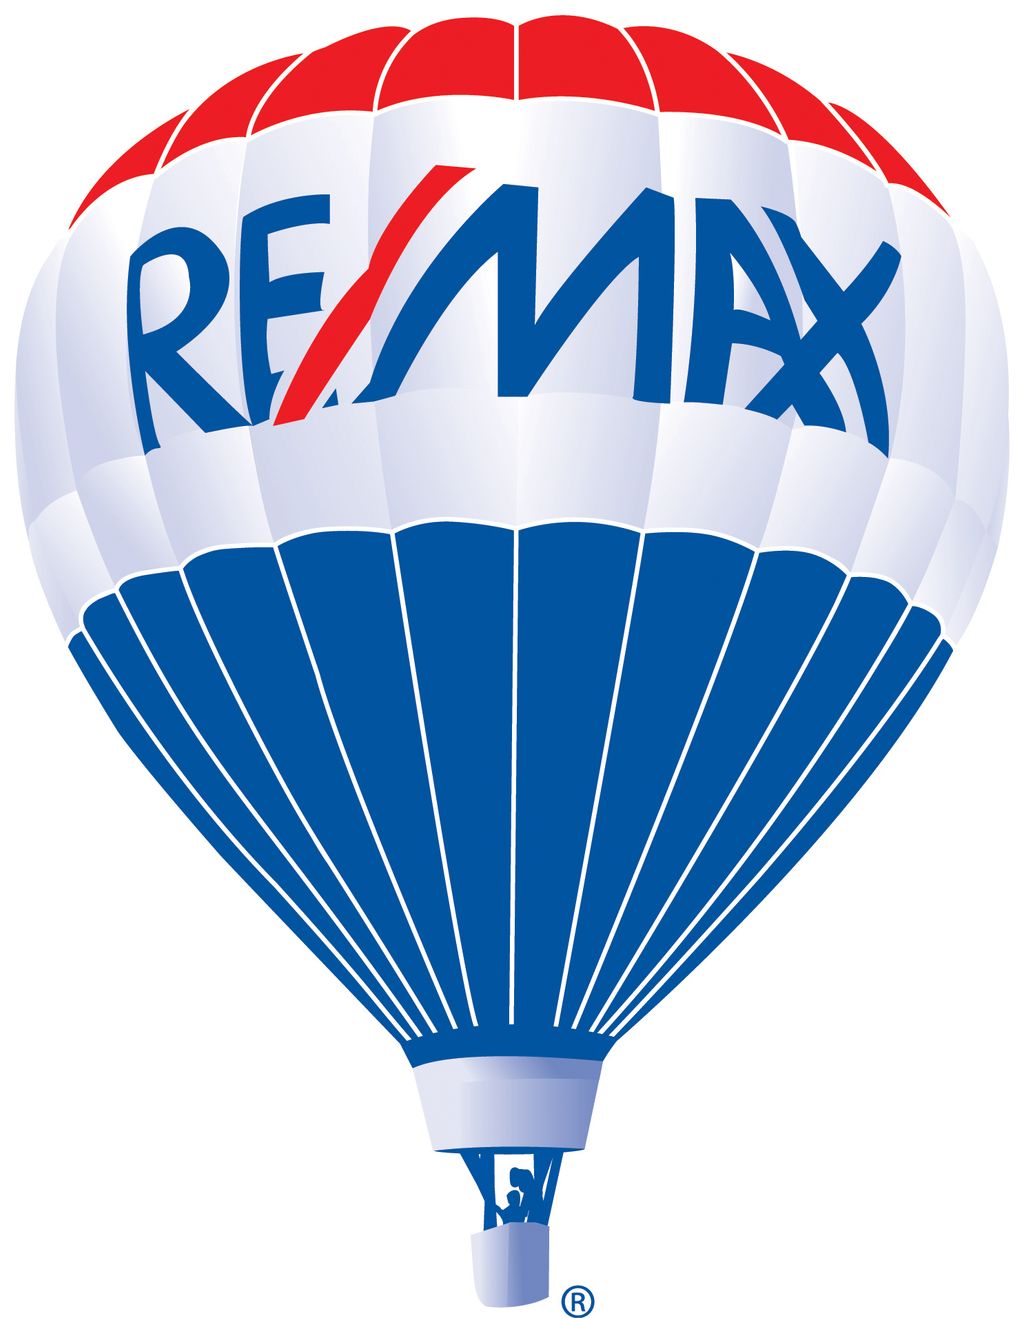 REMAX Advantage - Ravago Group